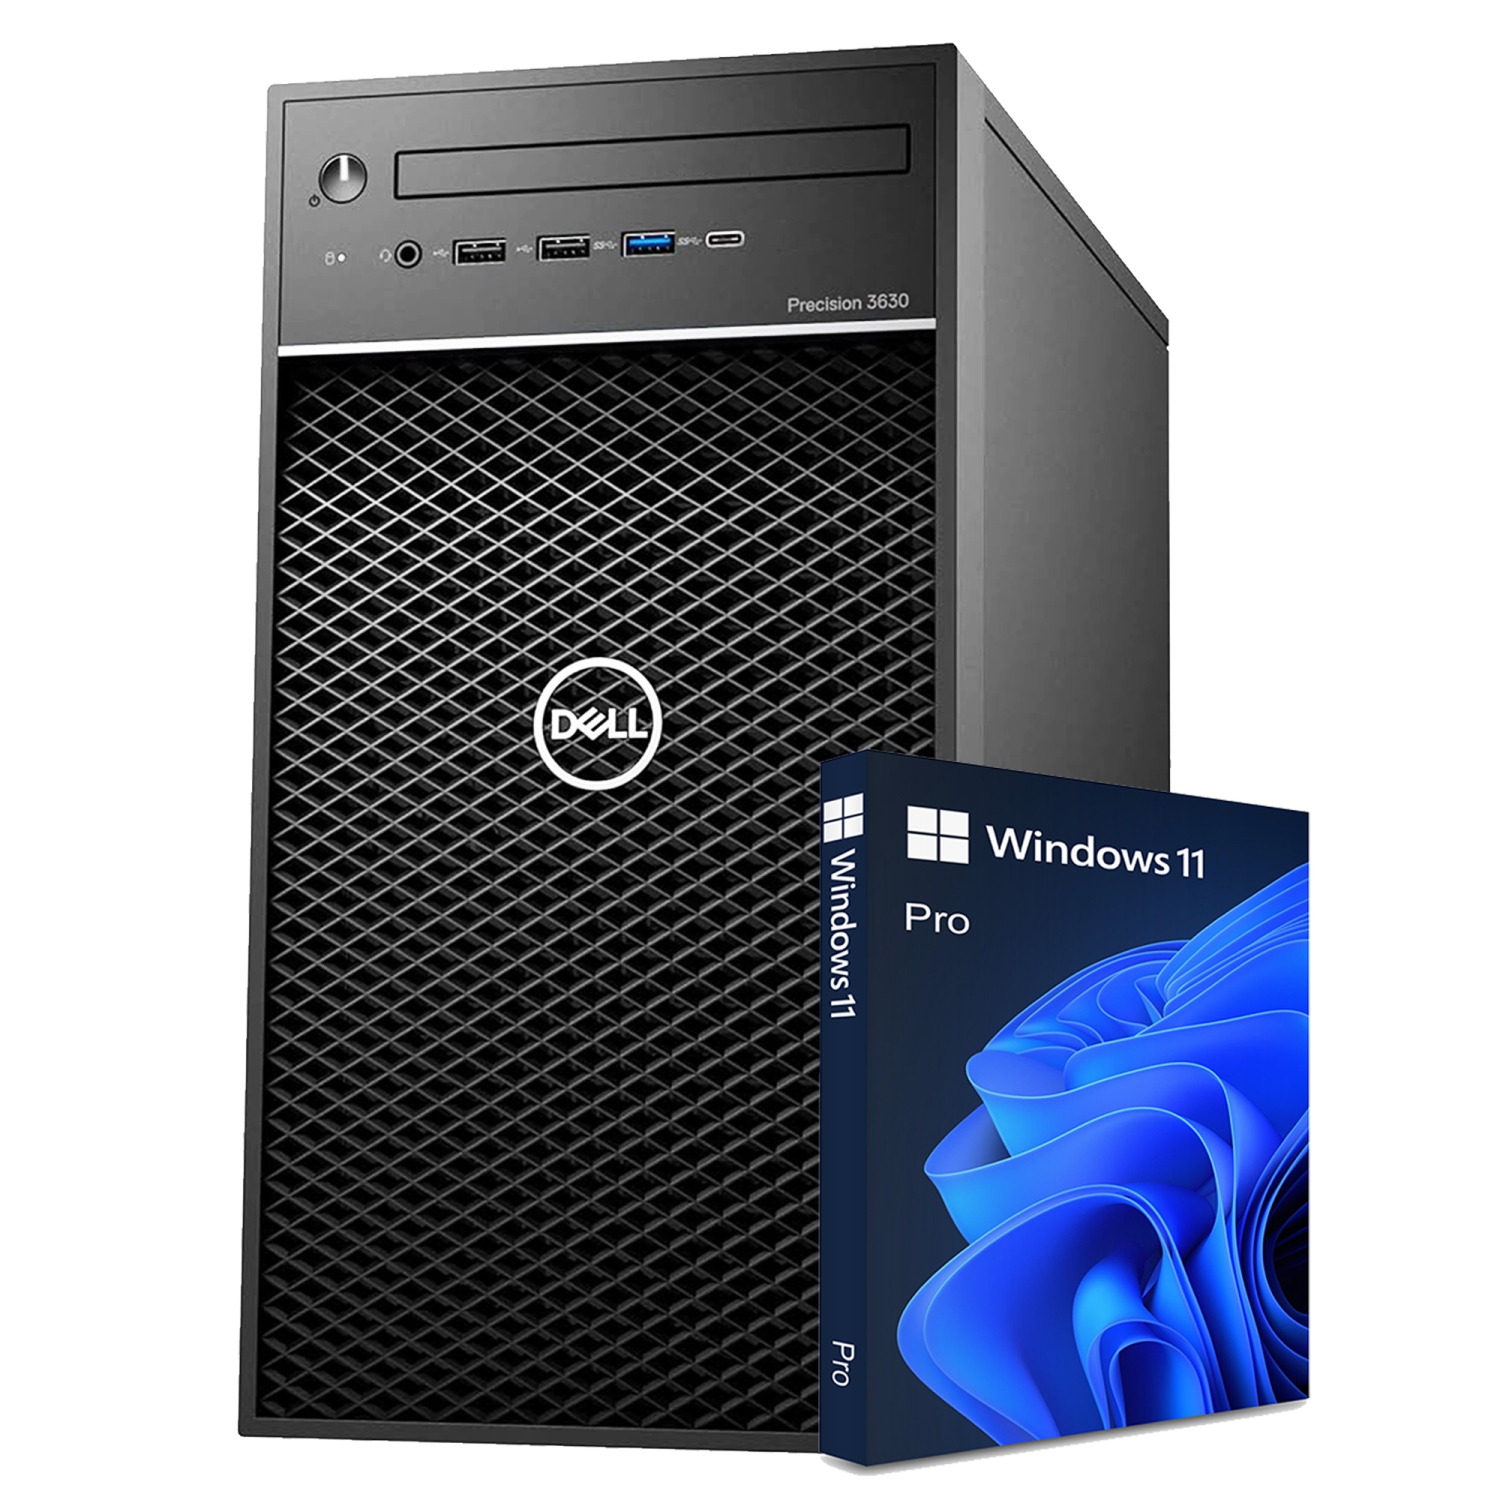 Refurbished (Good) - Desktop PC Dell Precision 3630 Business Computer Tower| Windows 11 Pro| Intel Hexa Core i5-8th Gen Processor| 16GB DDR4 RAM| 512GB SSD| WIFI/ Bluetooth Adapter